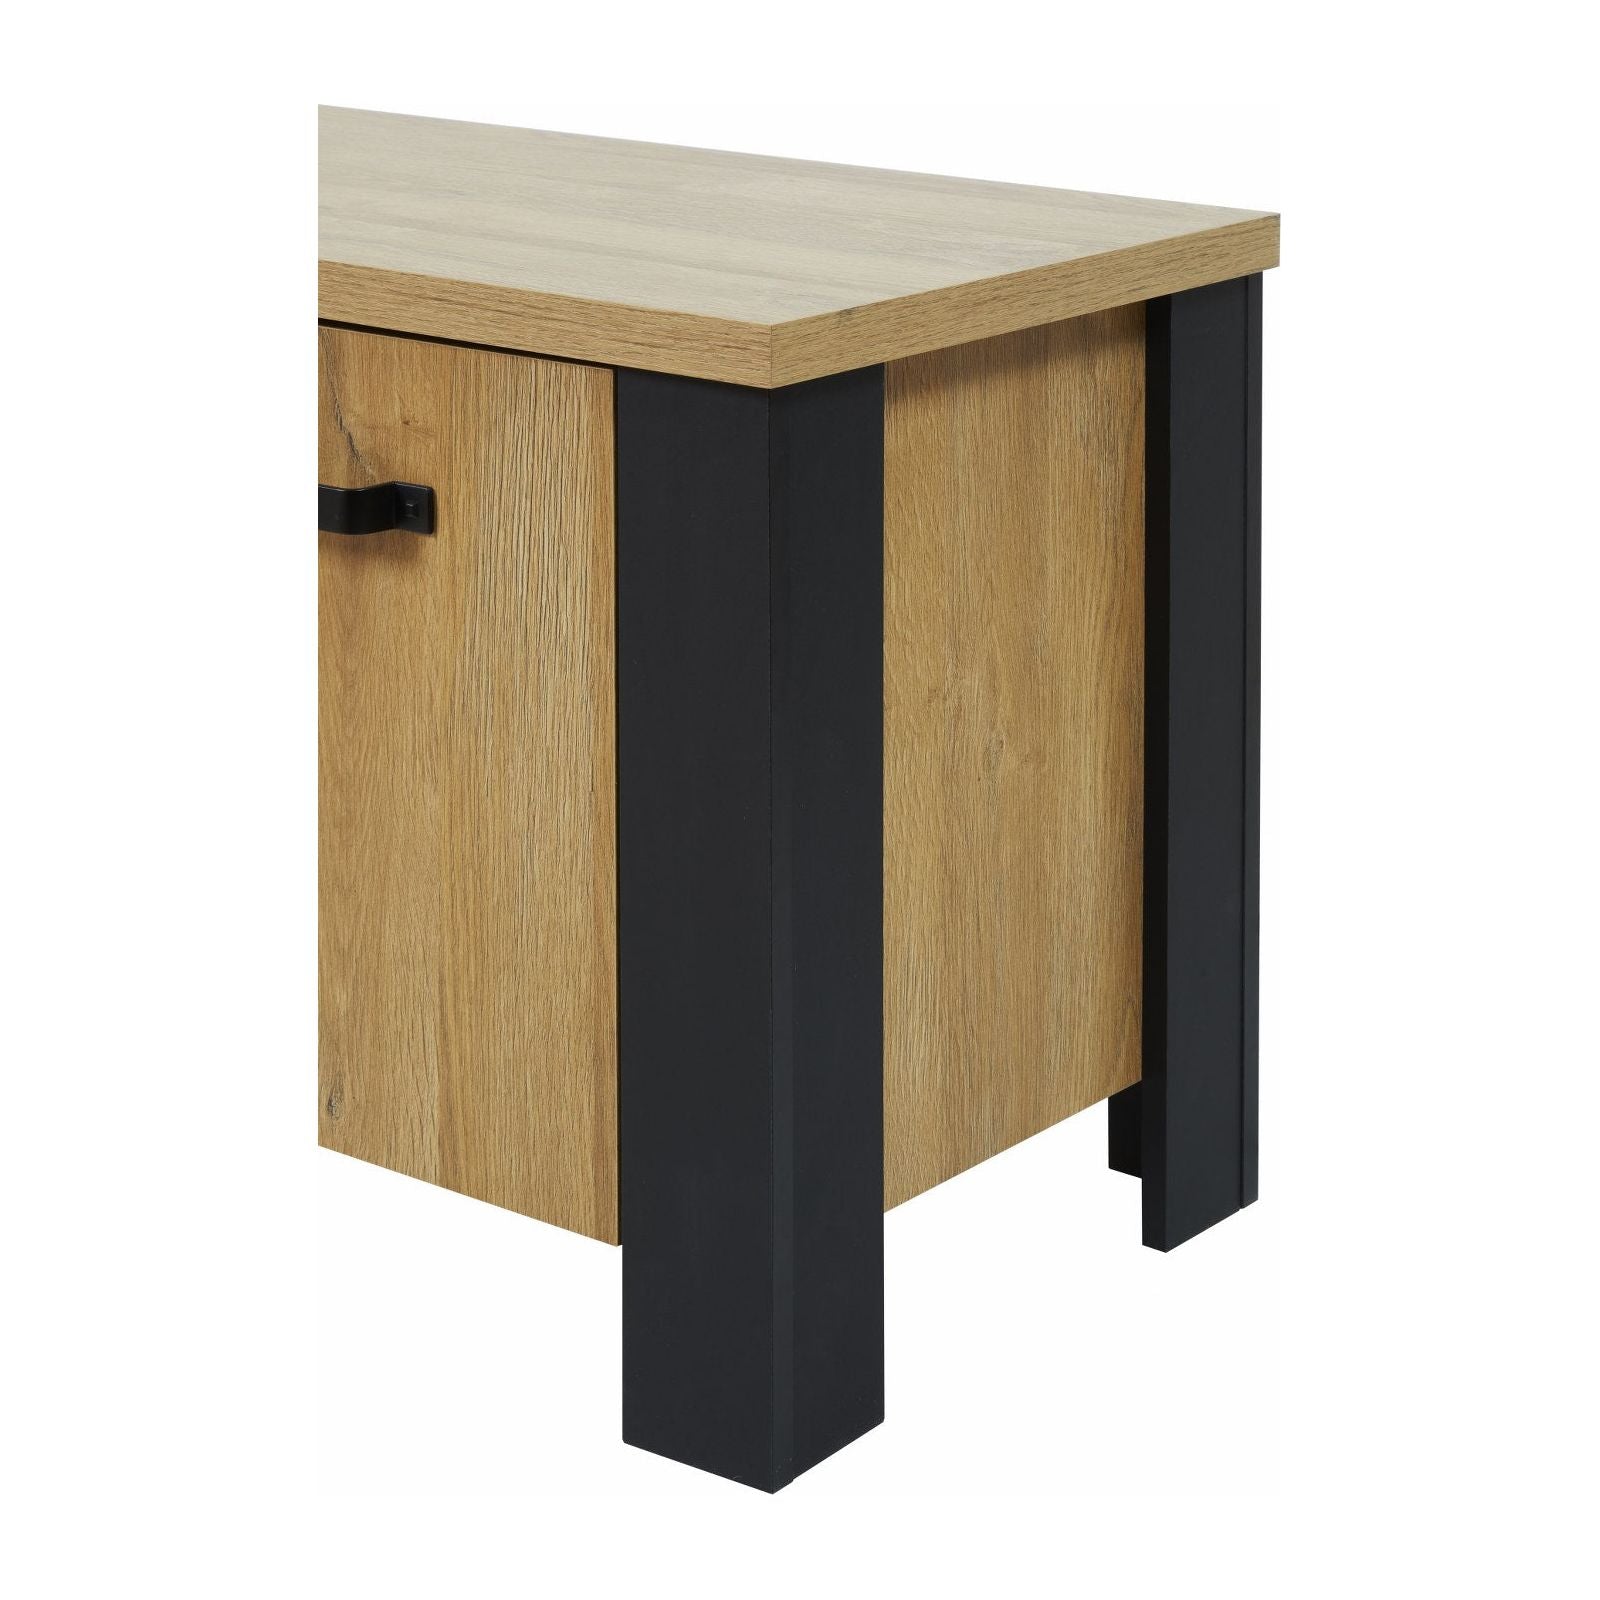 TV cabinet | Furniture series Highlight | brown, natural, black |